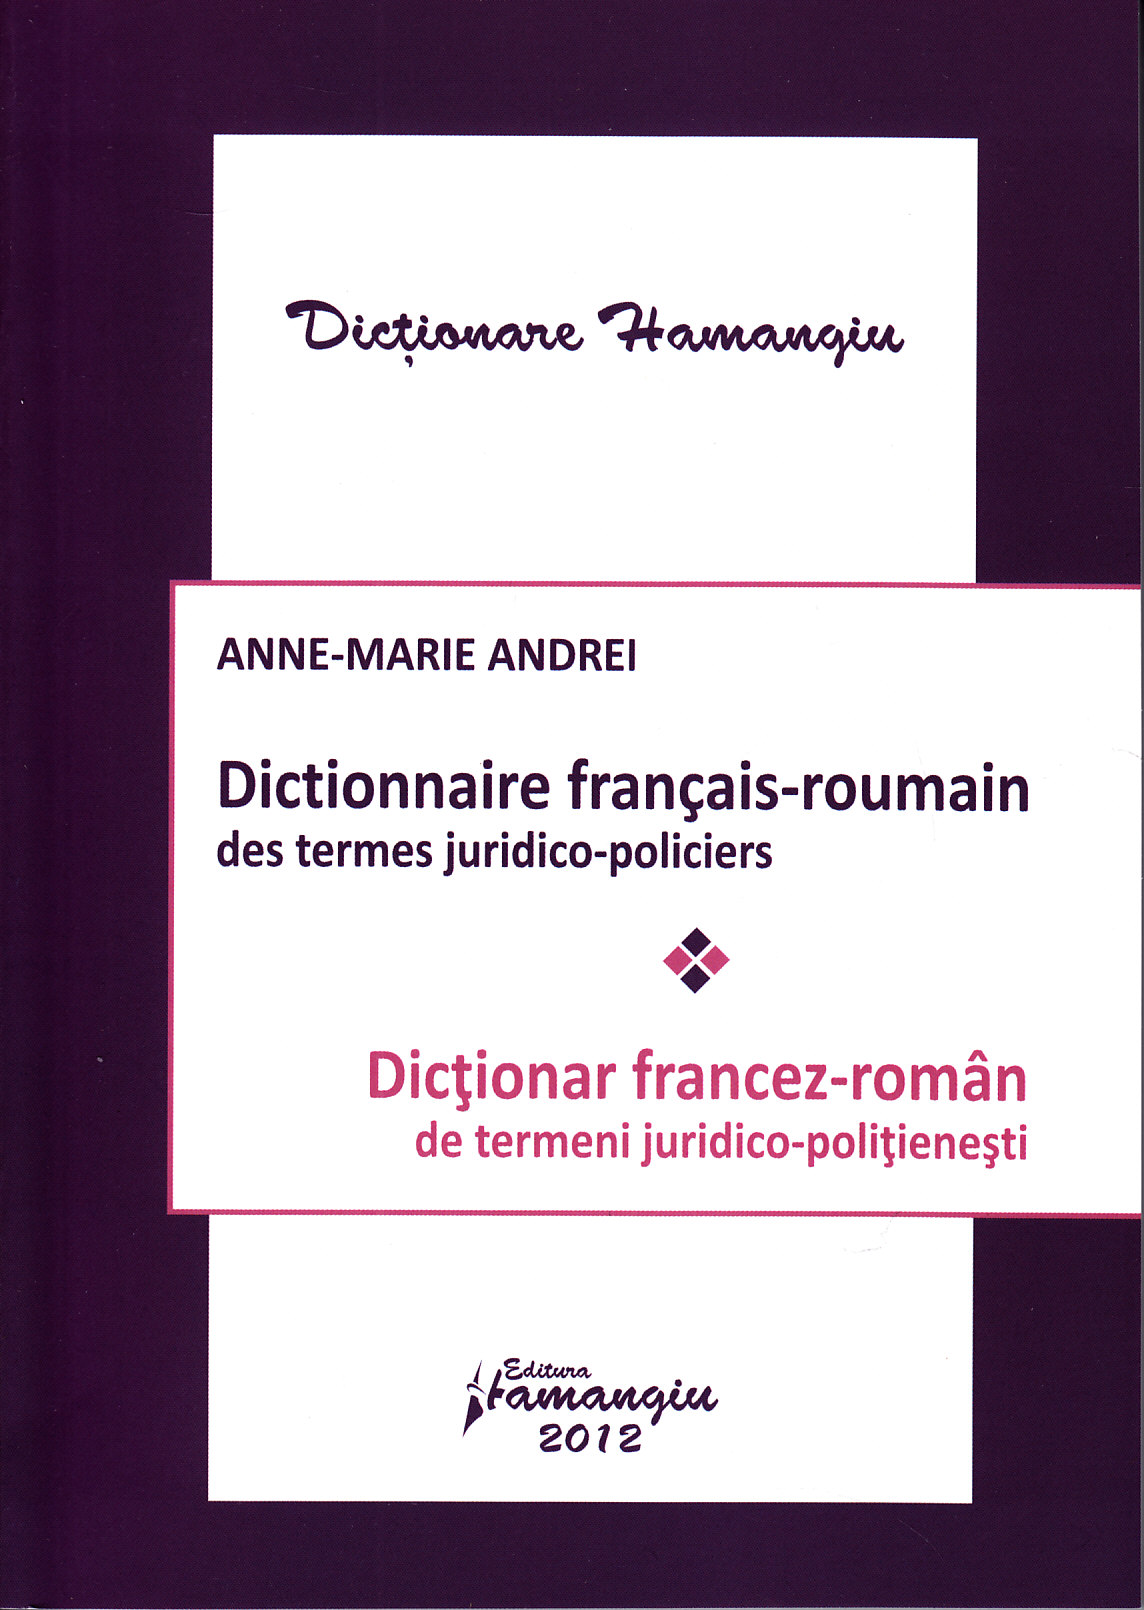 Dictionar Francez-Roman de termeni juridico-politienesti - Anne-Marie Andrei